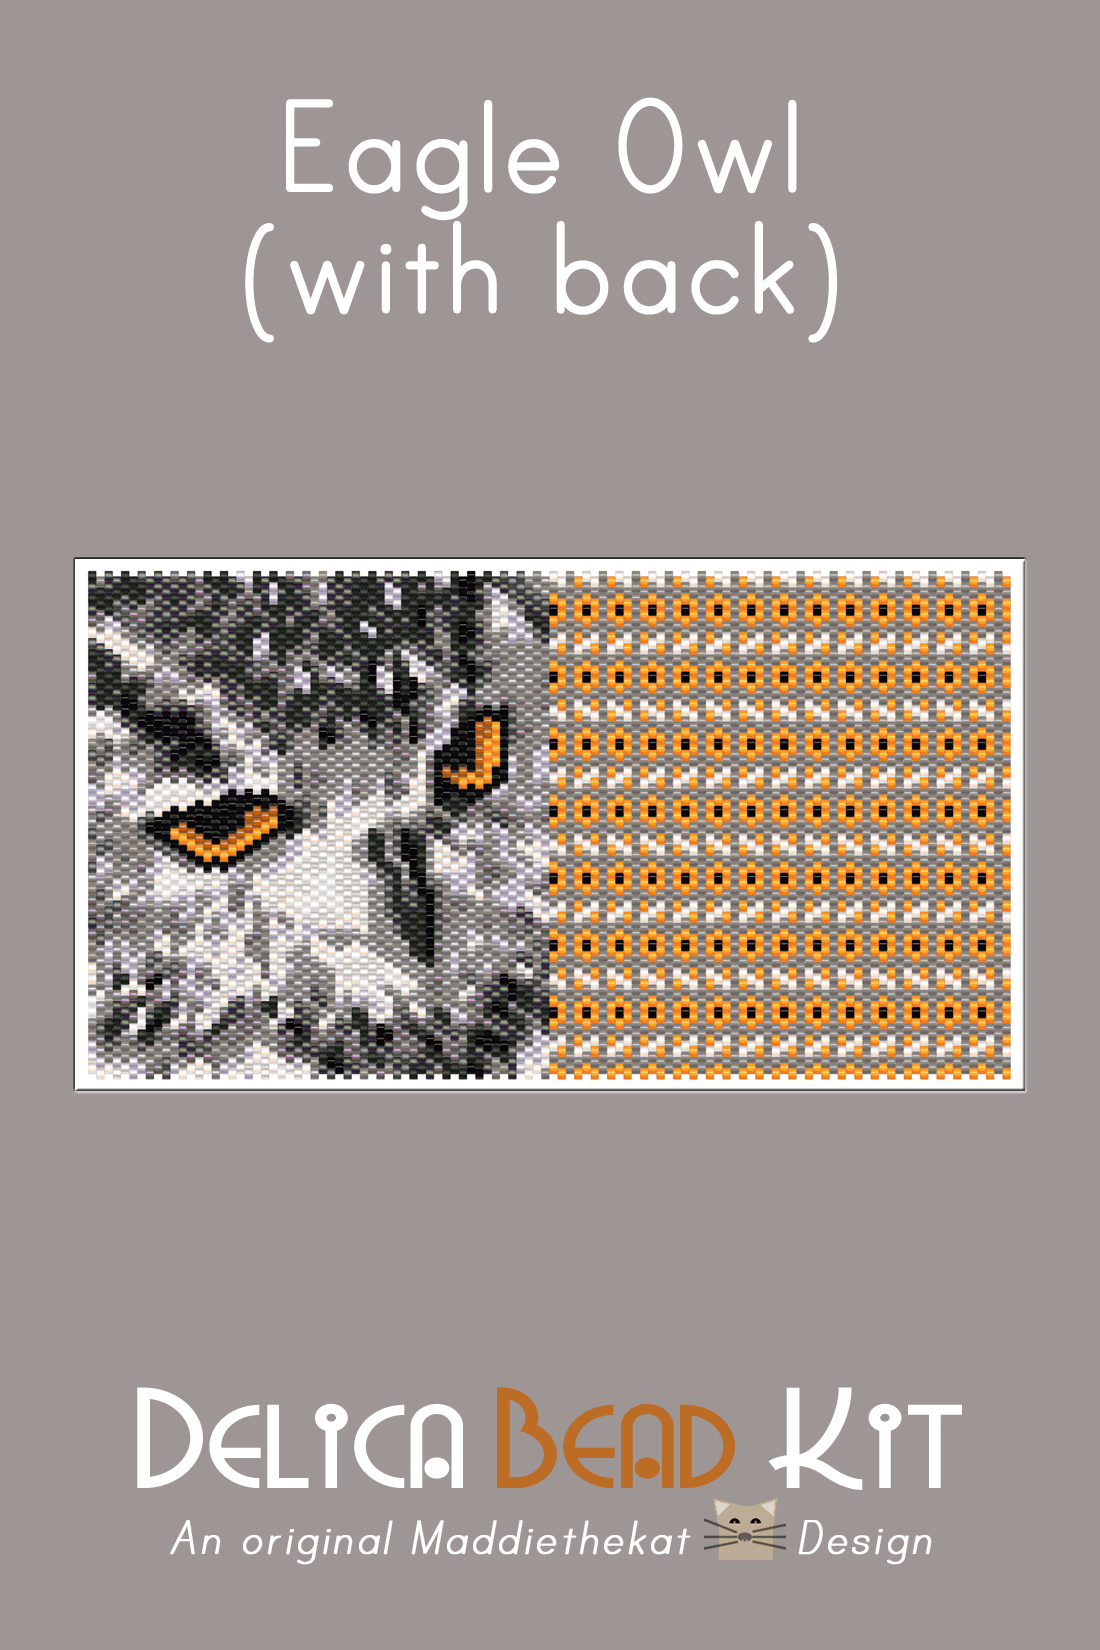 Eagle Owl With Back Peyote Bead Pattern PDF or Bead Kit